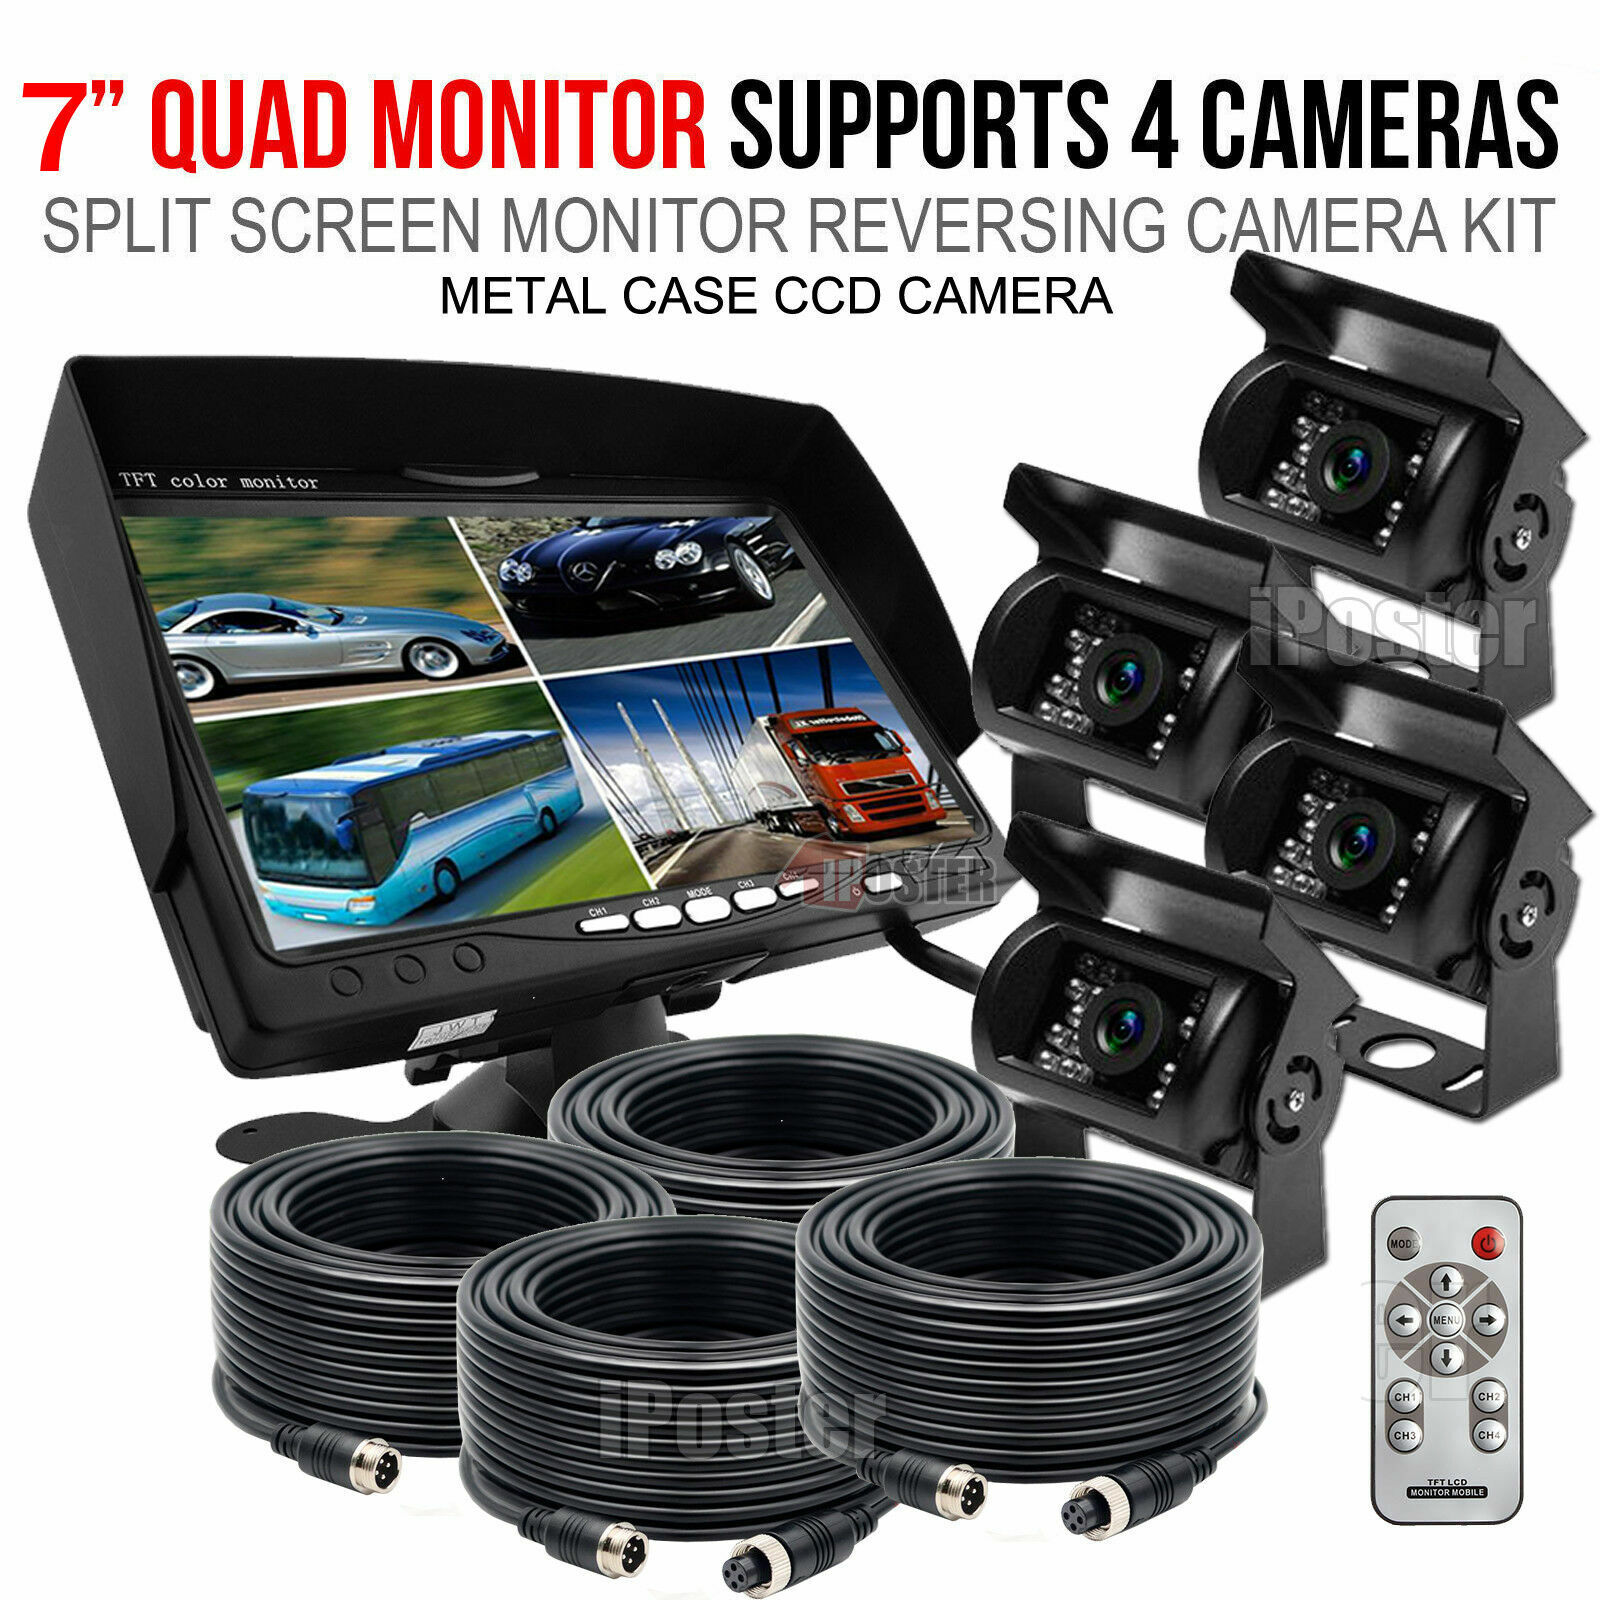 Backup Camera 7''Quad Split Monitor System for Truck,Trailer Heavy,Box,RV,Camper